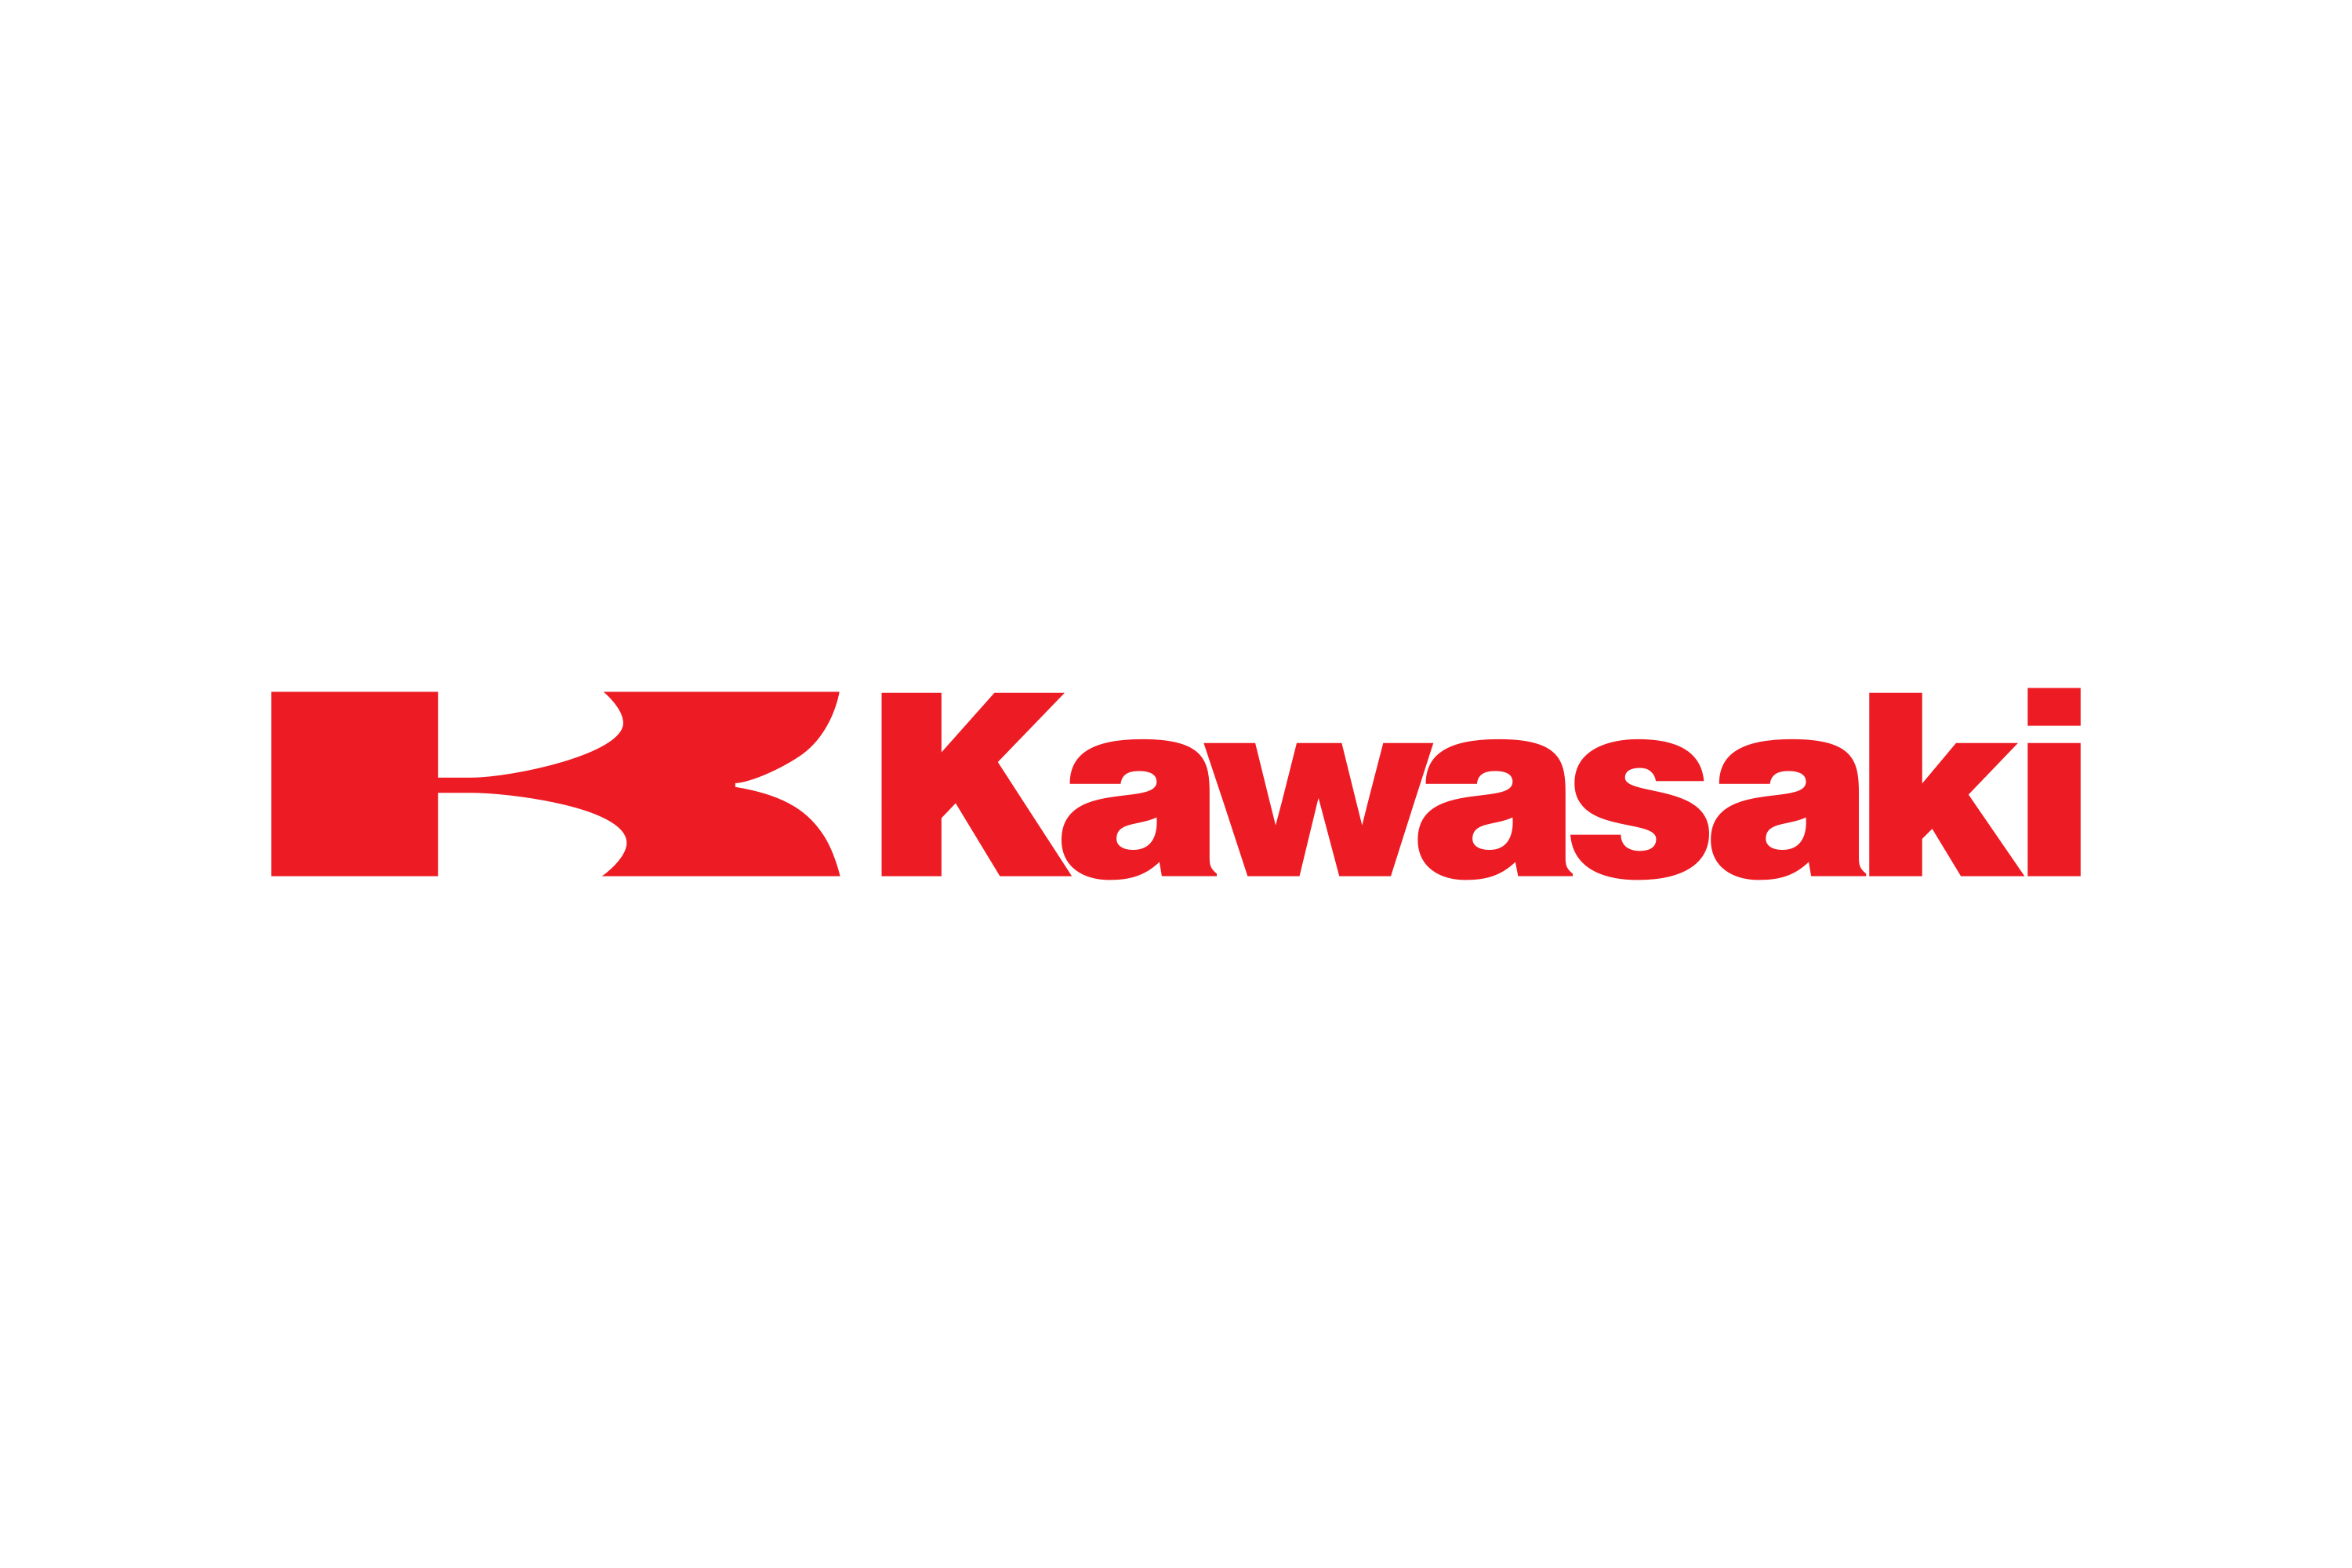 Kawasaki Motors Philippines Logo - Free download logo in SVG or PNG format